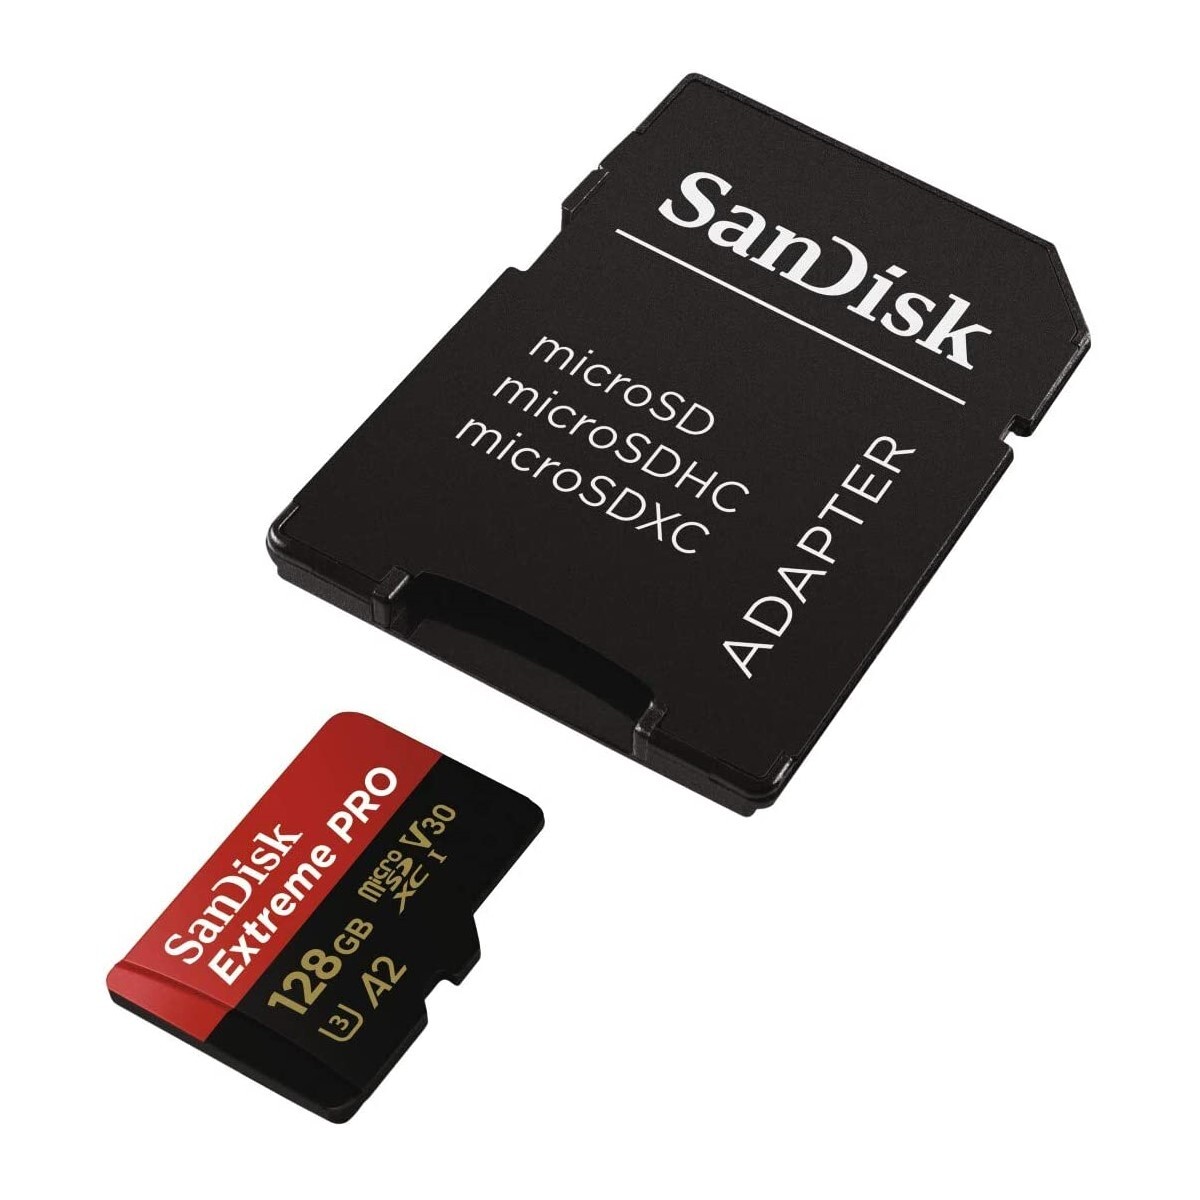 Tarjeta micro sd sandisk 128gb extreme pro 170mb/s 4k + adaptador Tarjeta micro sd sandisk 128gb extreme pro 170mb/s 4k + adaptador